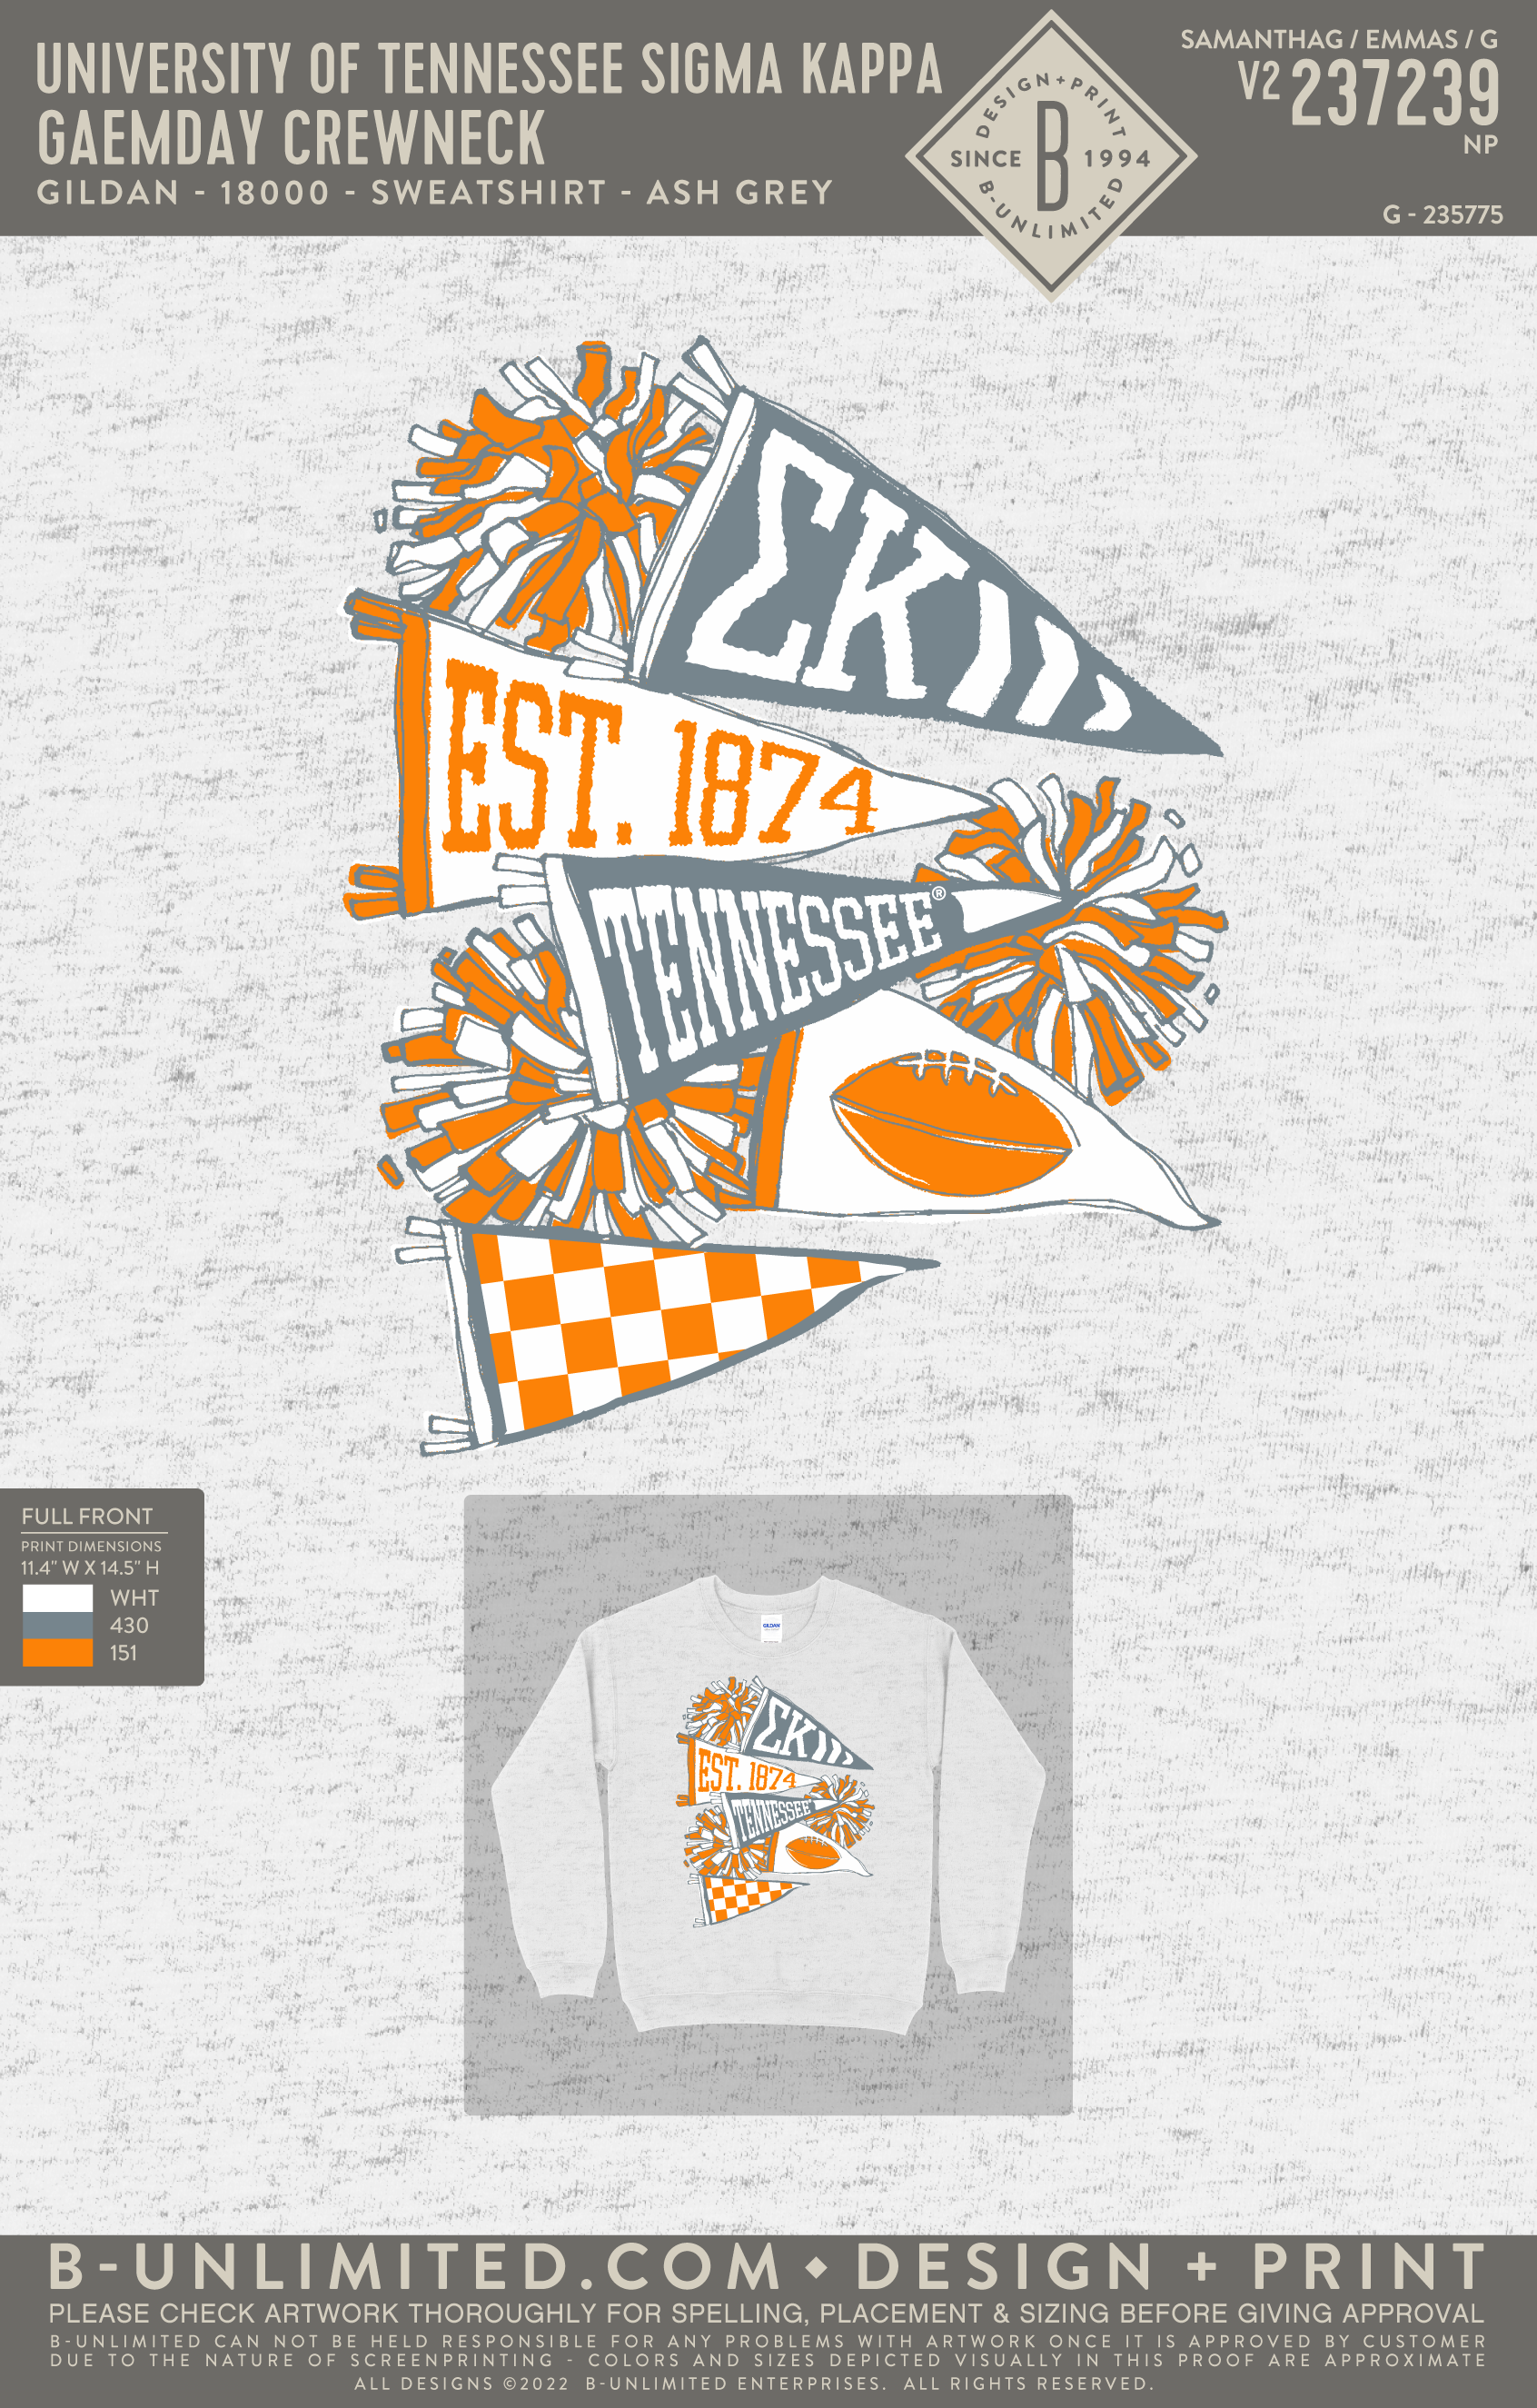 University of Tennessee Sigma Kappa - Gameday Crewneck - Gildan - 18000 - Sweatshirt - Ash Grey